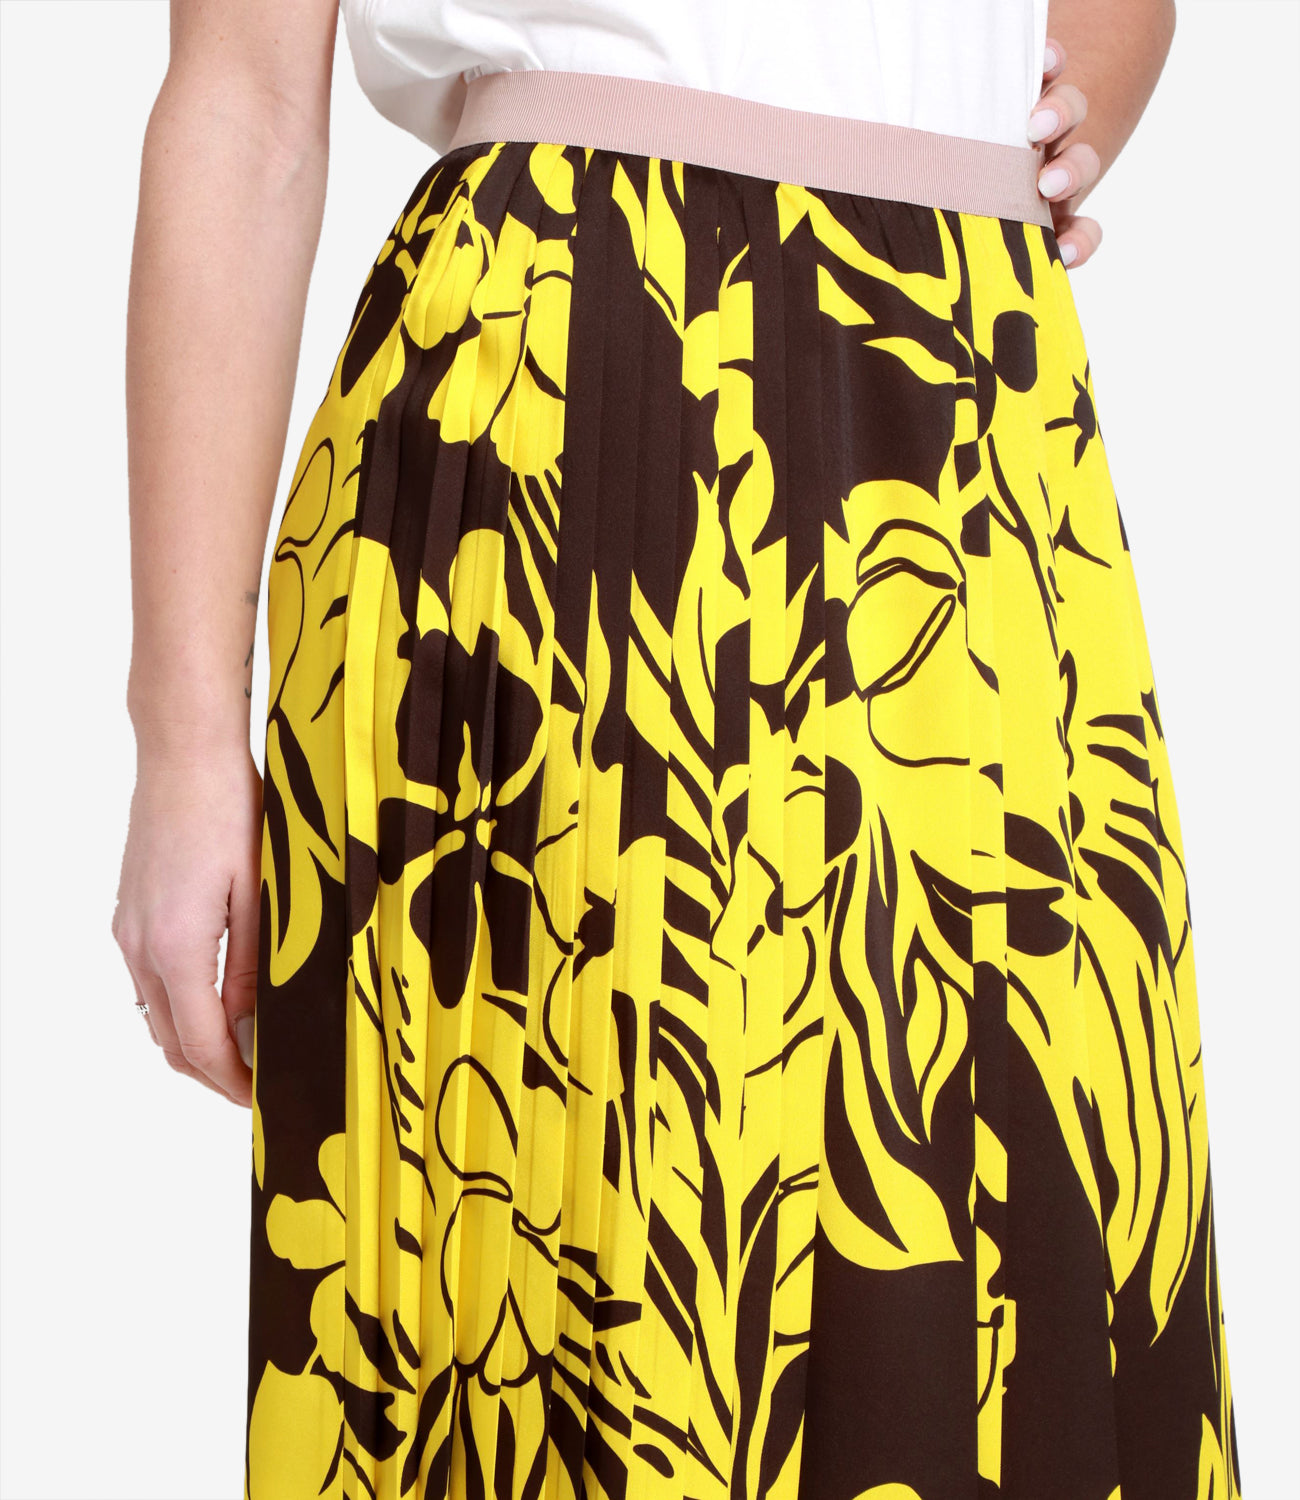 N 21 | Yellow and Black Skirt